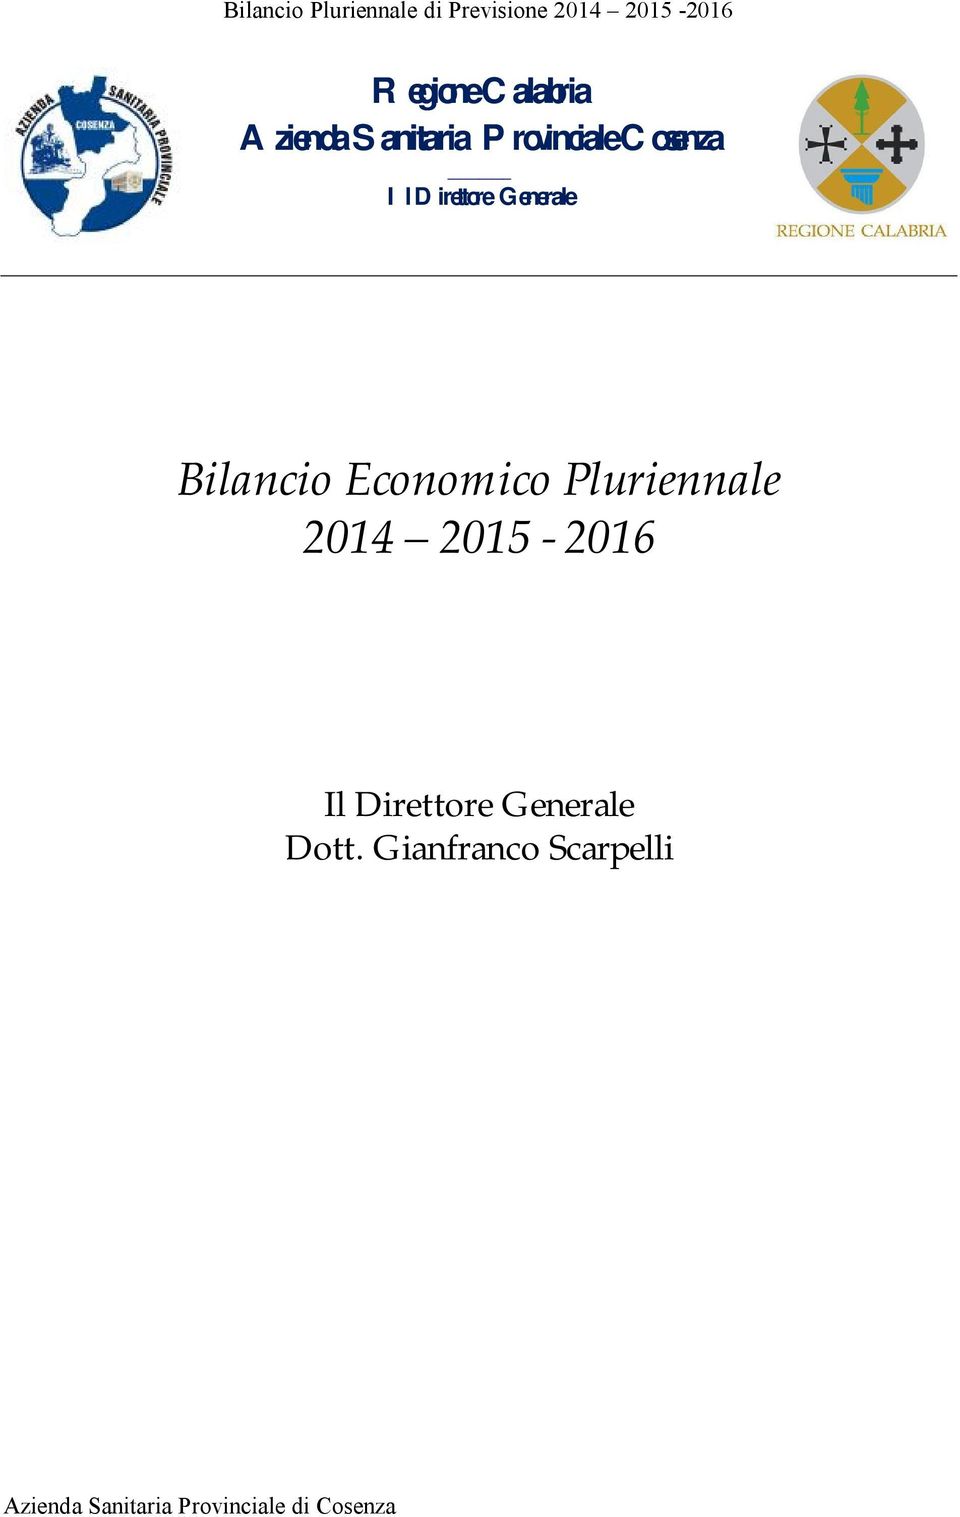 Bilancio Economico Pluriennale 2014